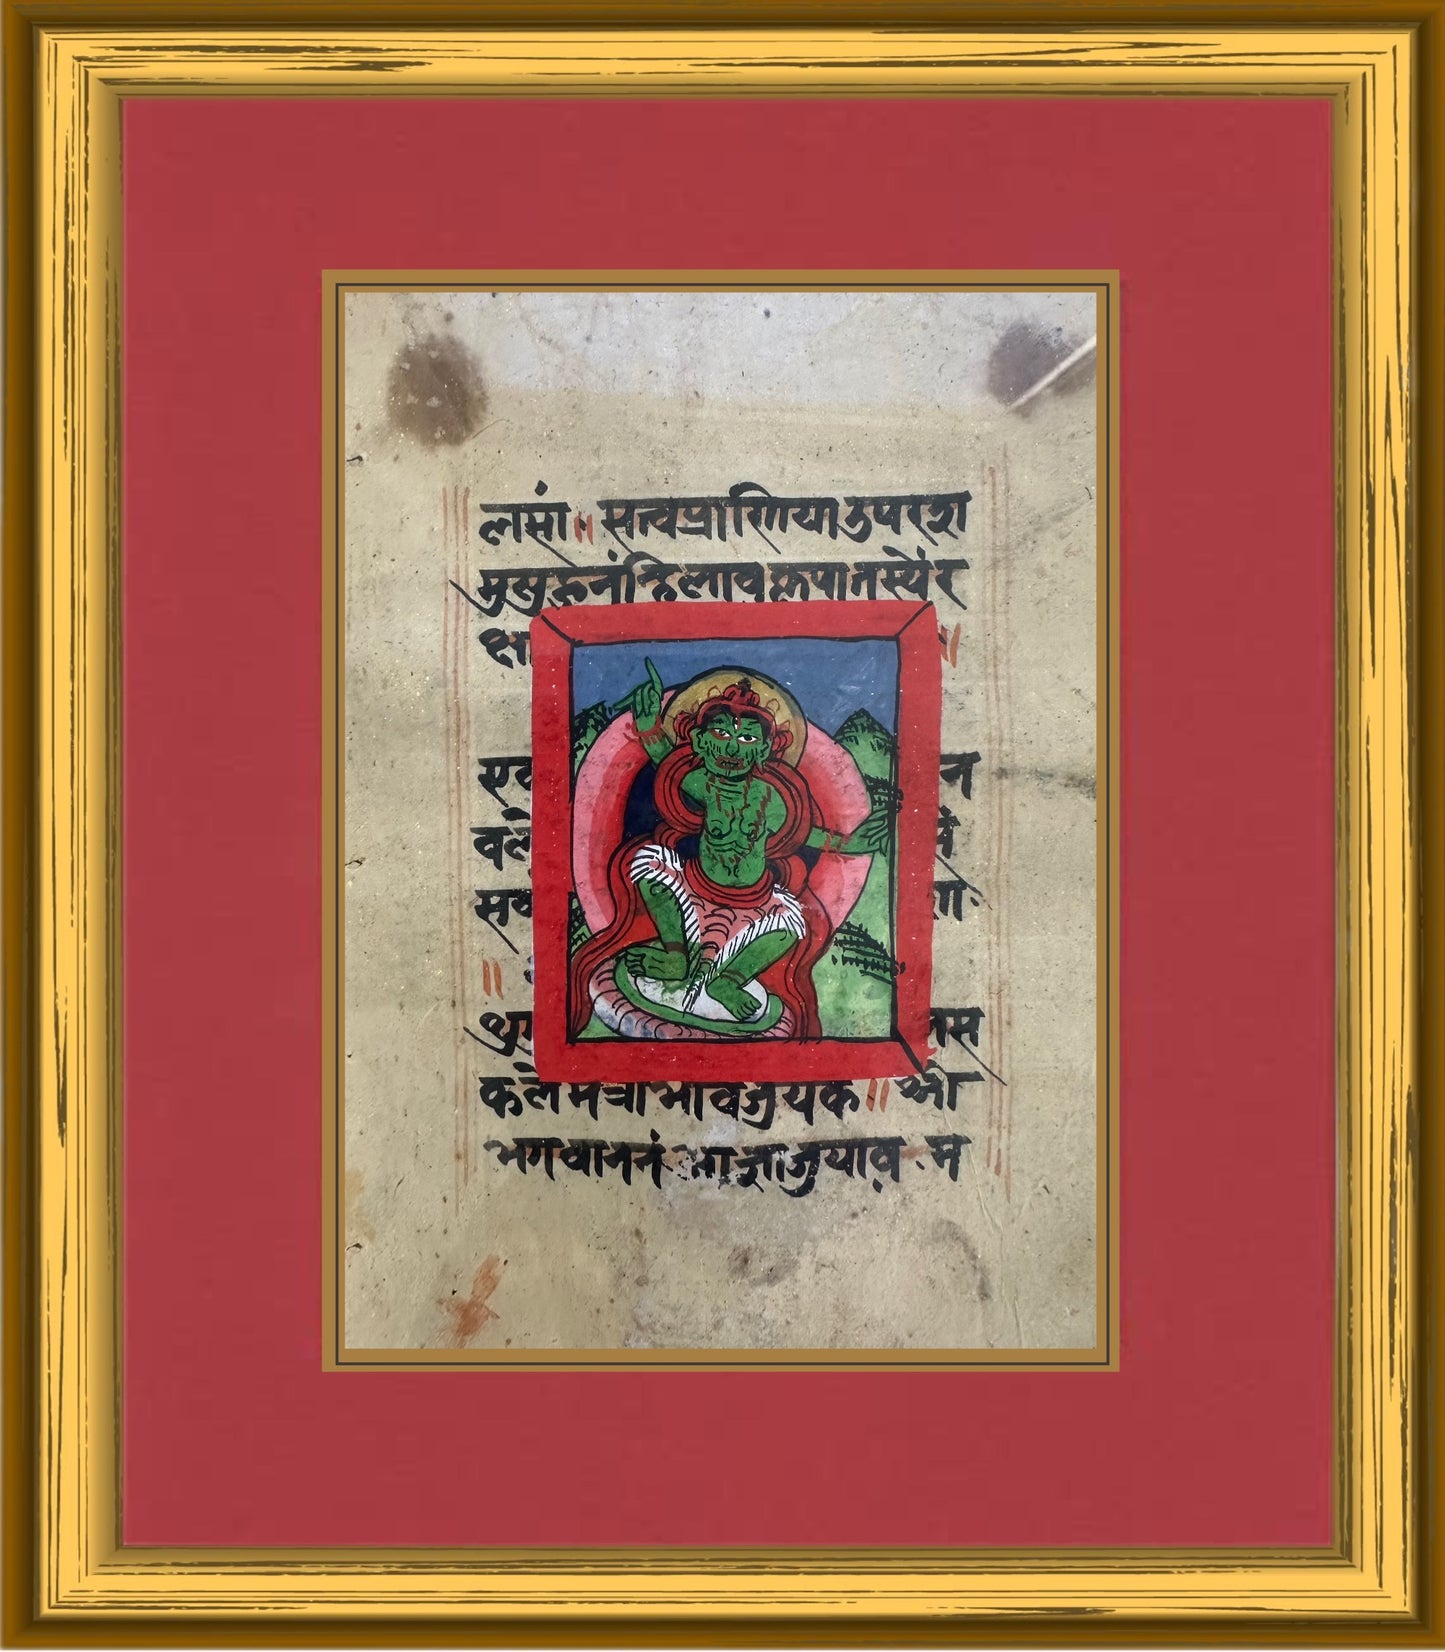 Tibetan Manuscript Paintings, Painting set of 9, Antique Buddhist Paintings, Buddhist Painting, Tibetan Art, Antique Art, Wall Art Original, Hand Painted, Series - 2 - DharBazaar